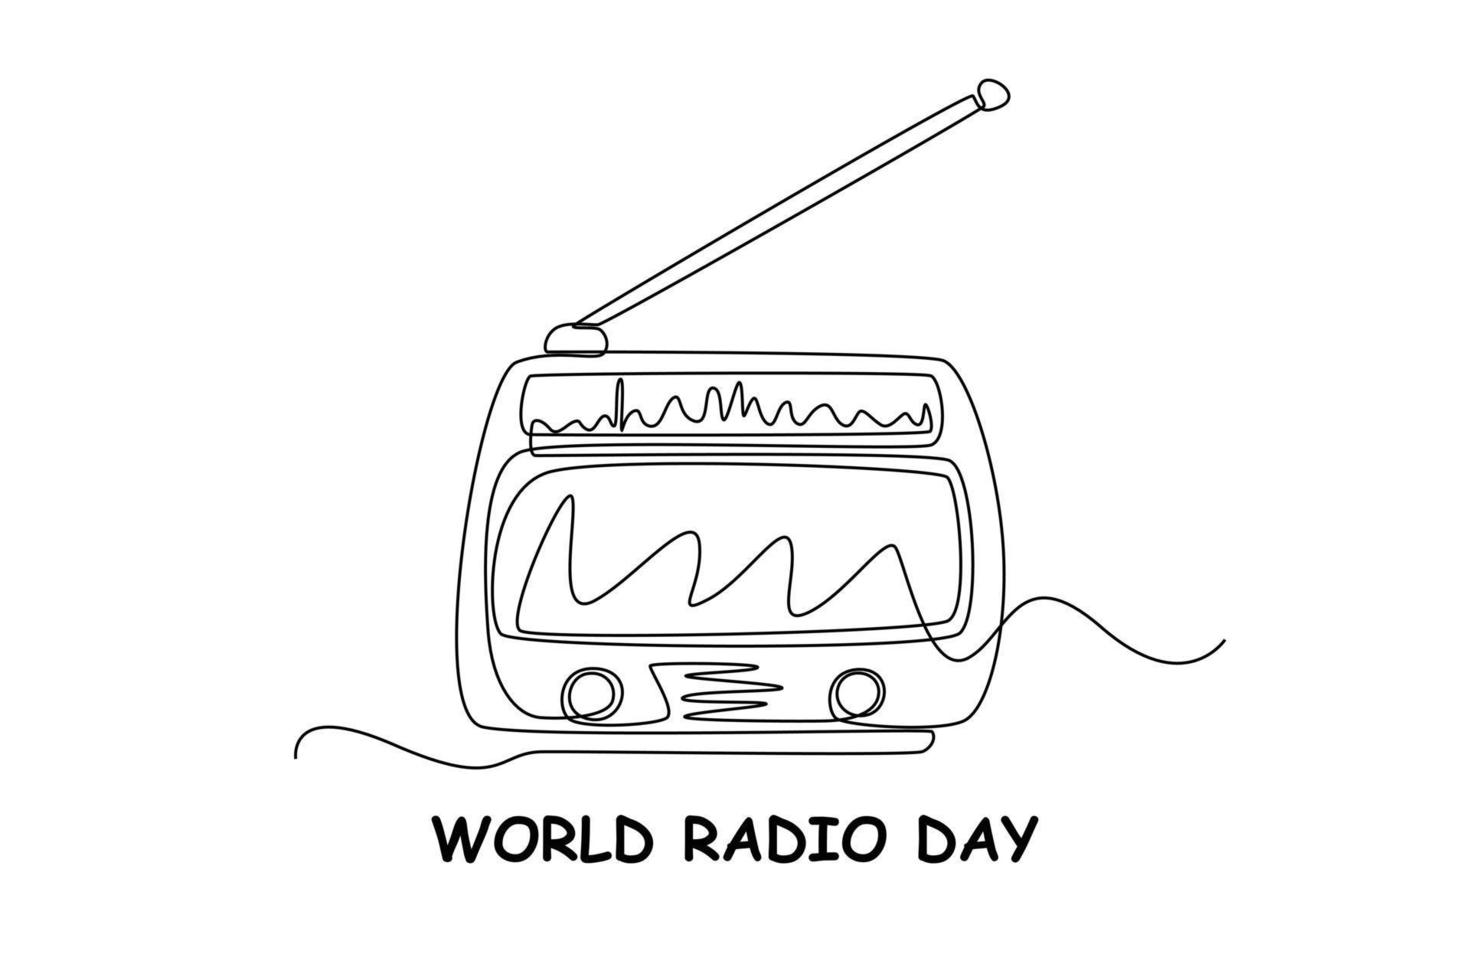 Single one line drawing retro style radio. World radio day concept. Continuous line draw design graphic vector illustration.